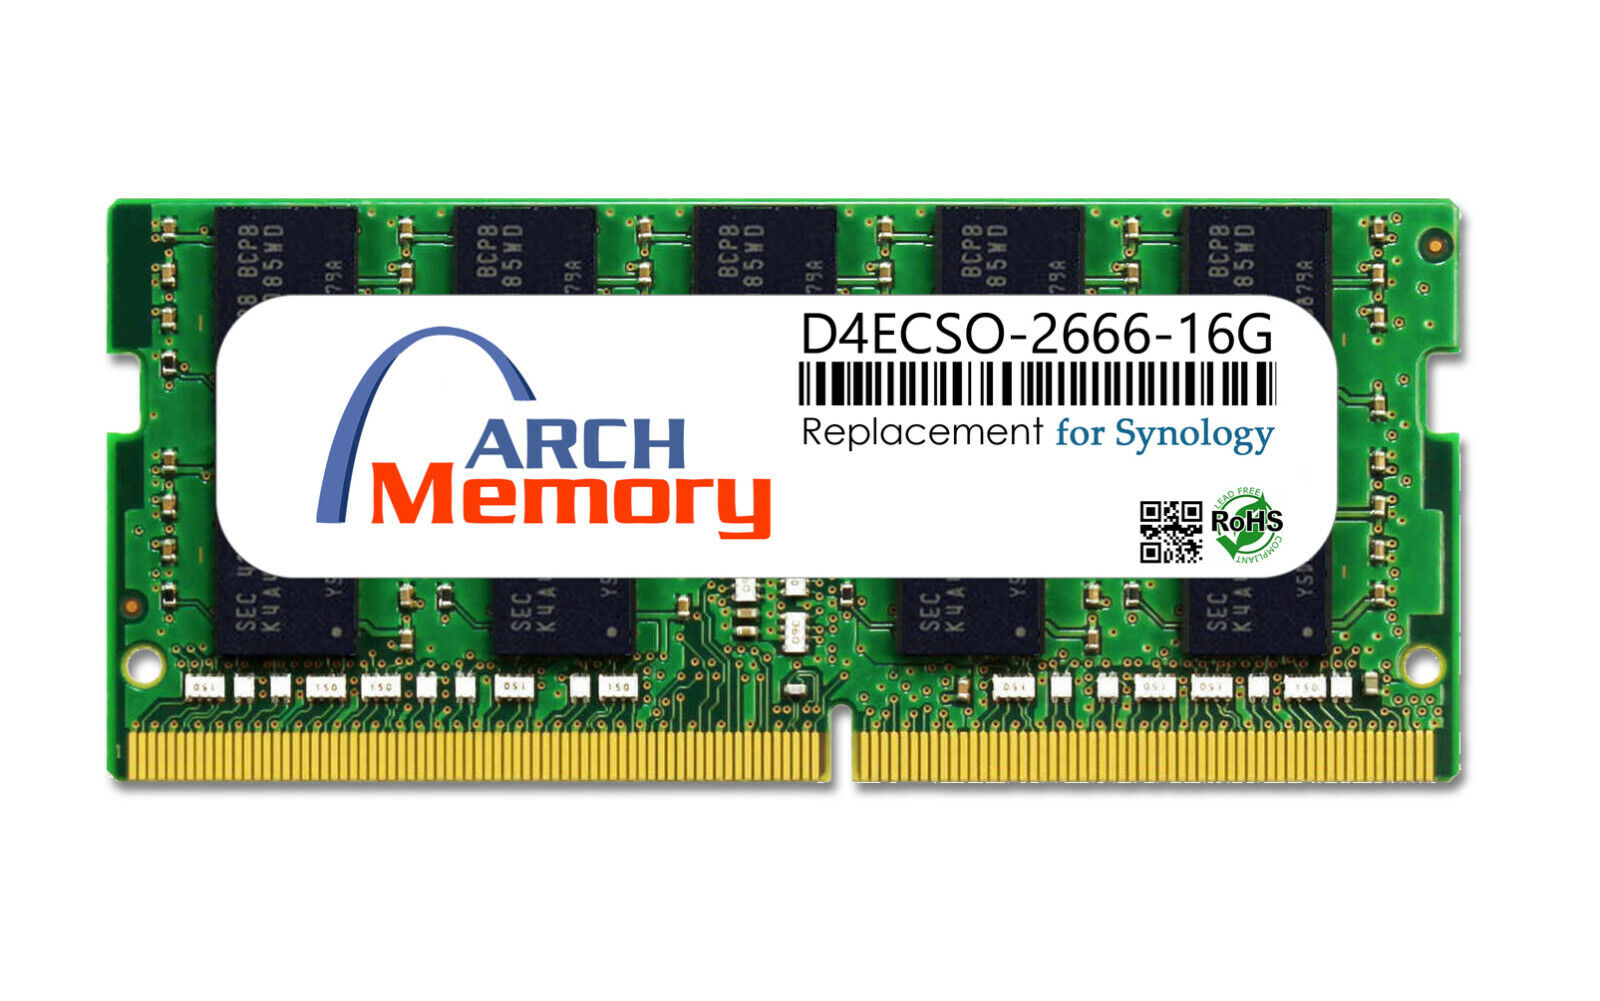 16GB D4ECSO-2666-16G DDR4-2666 260-Pin ECC Sodimm RAM for Synology NAS DS2419+